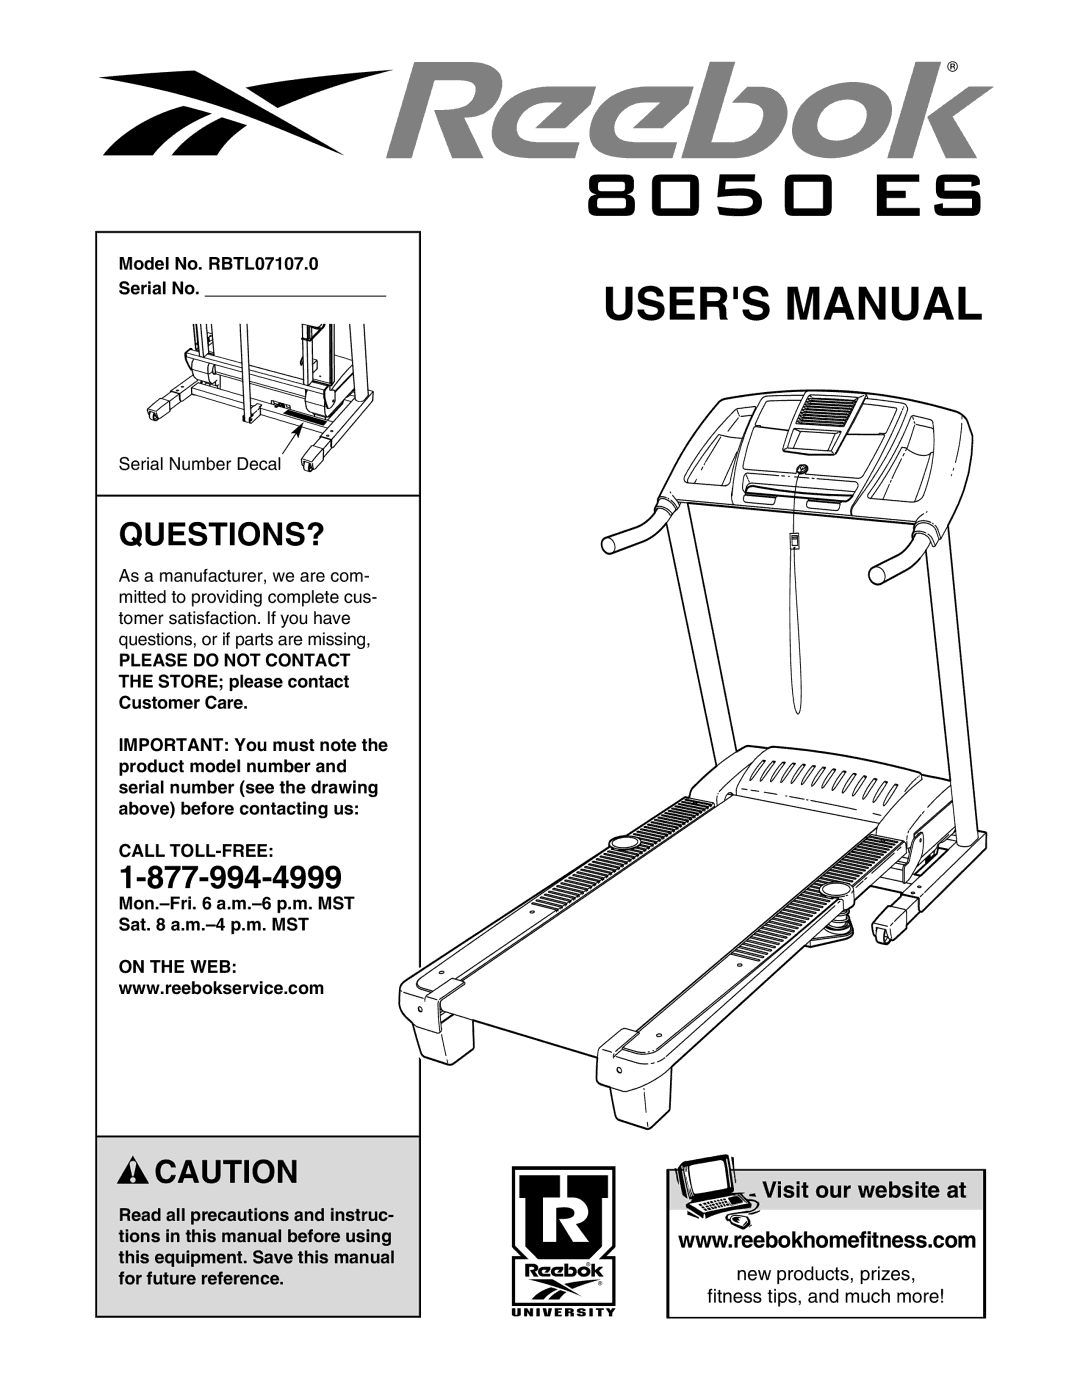 Reebok Fitness manual Questions?, Model No. RBTL07107.0 Serial No, Call TOLL-FREE, On the WEB 